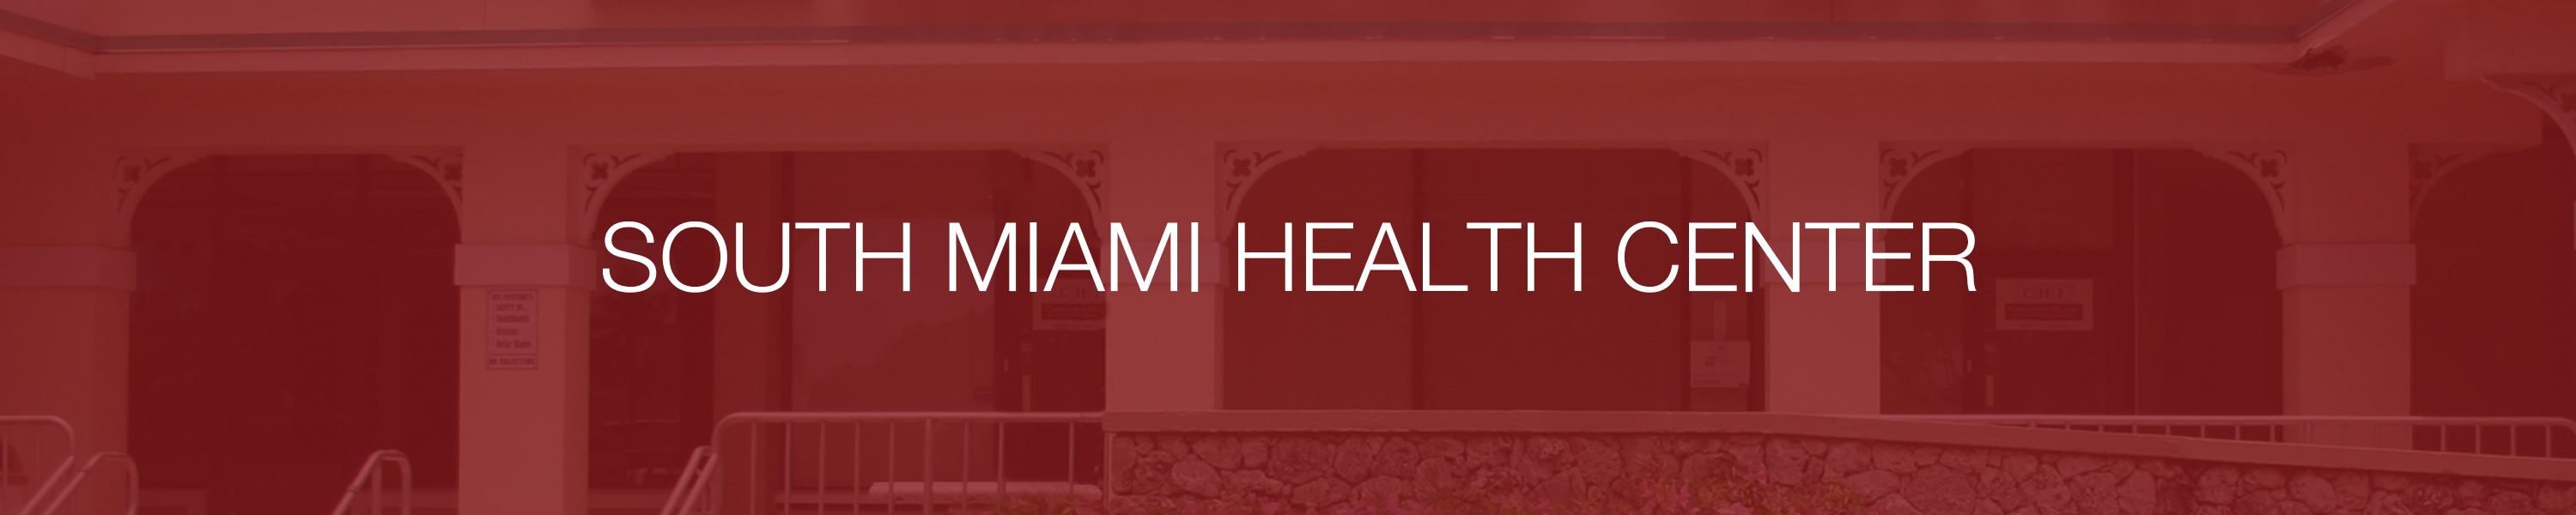 South Miami Health Center